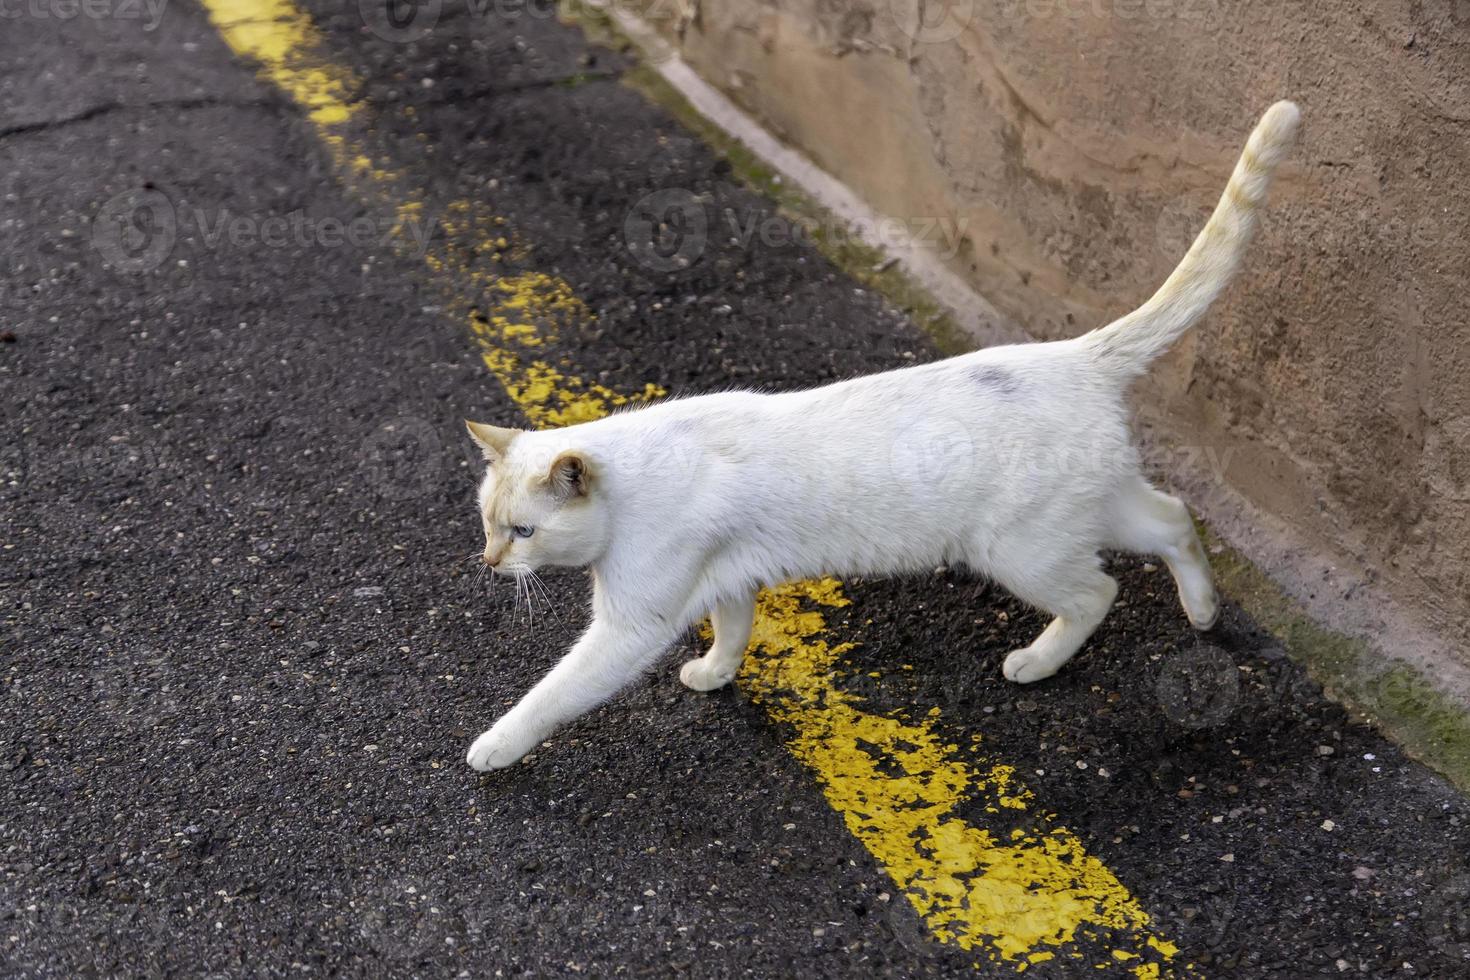 gato callejero abandonado foto